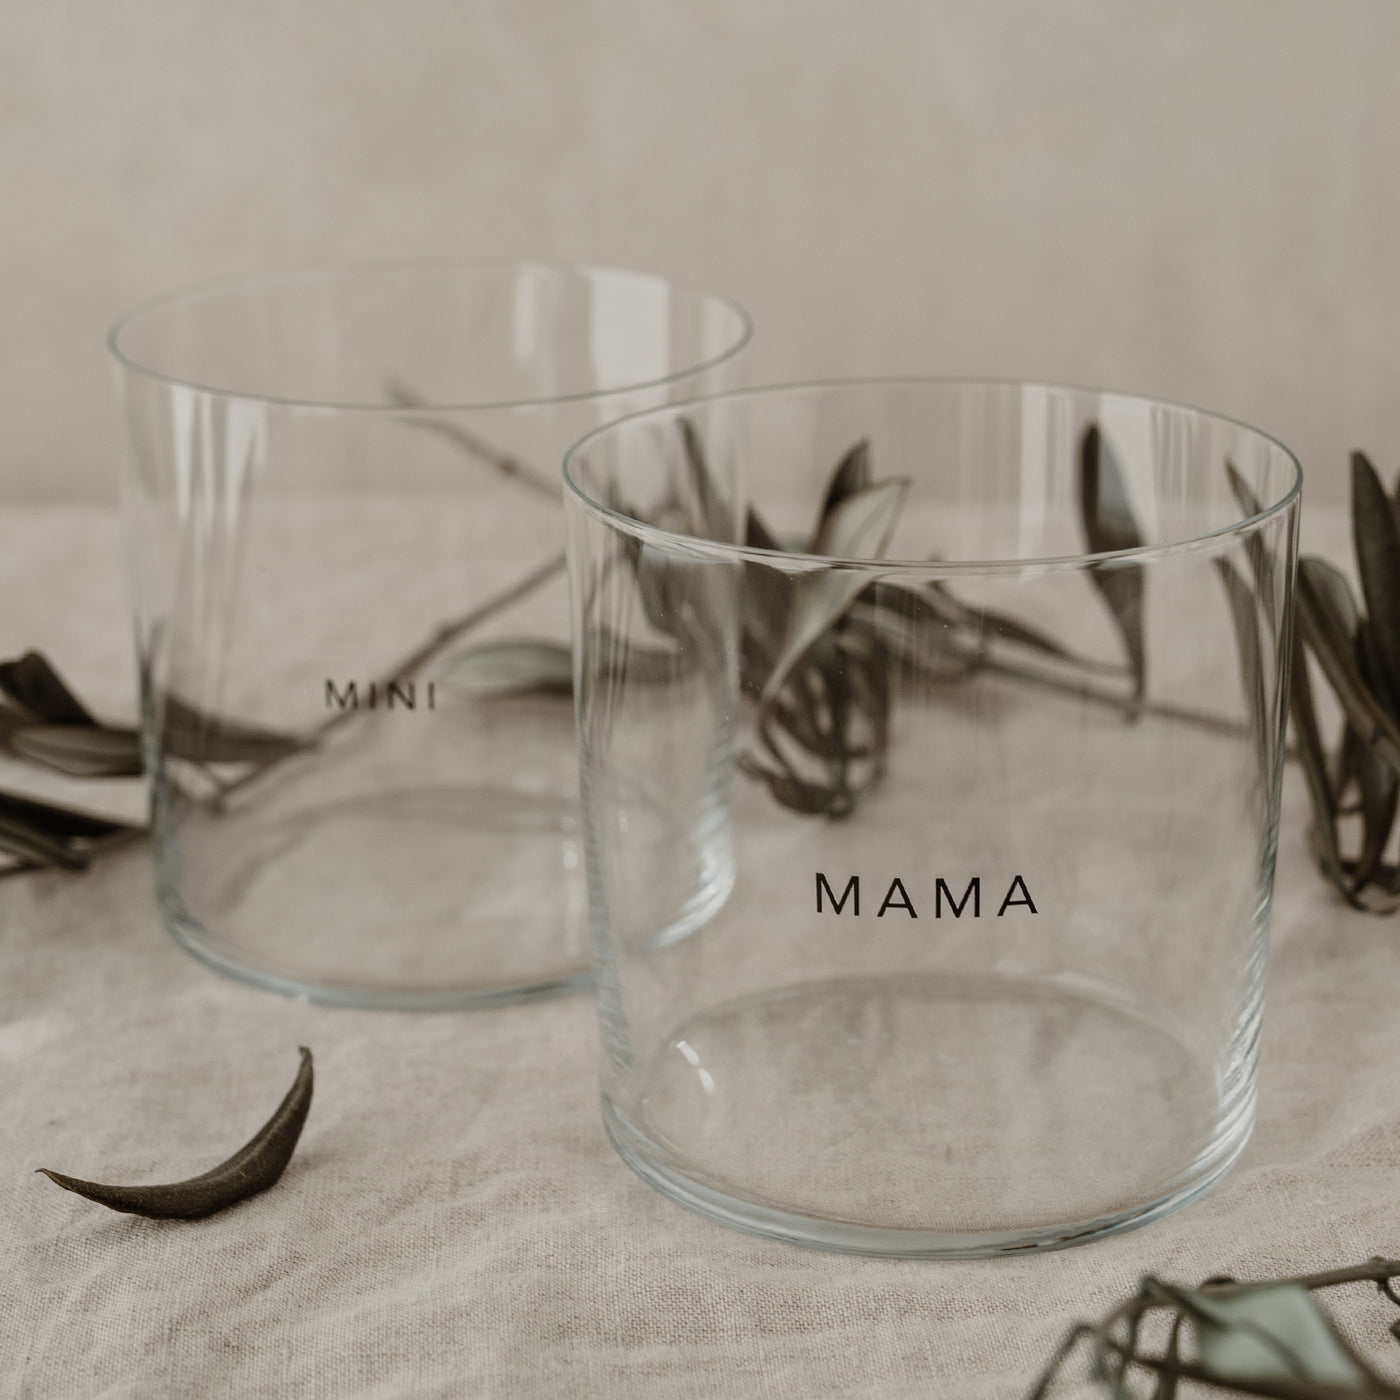 Drinking glass set of 2 Mama & Mini black